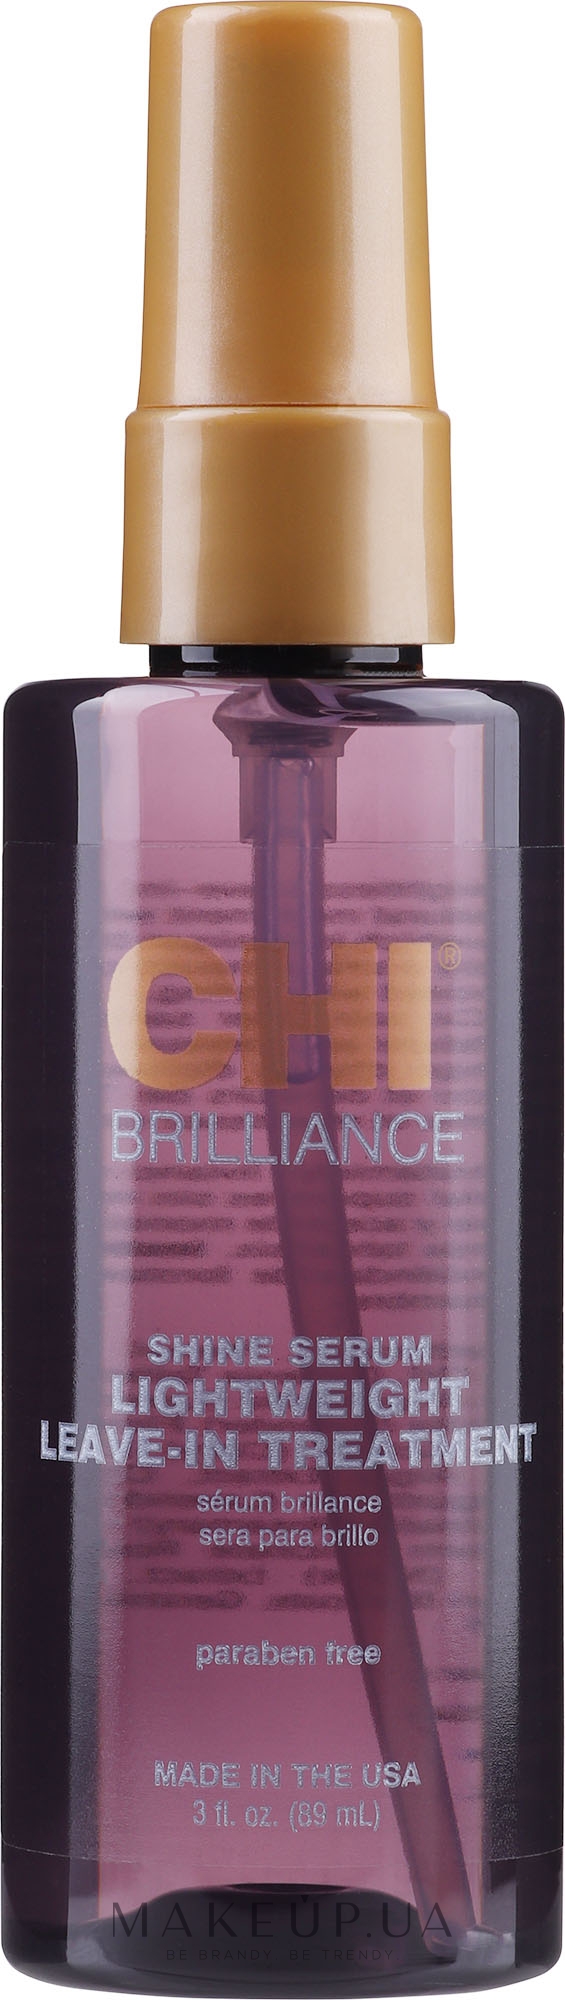 Несмываемая сыворотка-шелк для волос - CHI Deep Brilliance Shine Serum Light Weight Leave-In Treatment — фото 89ml